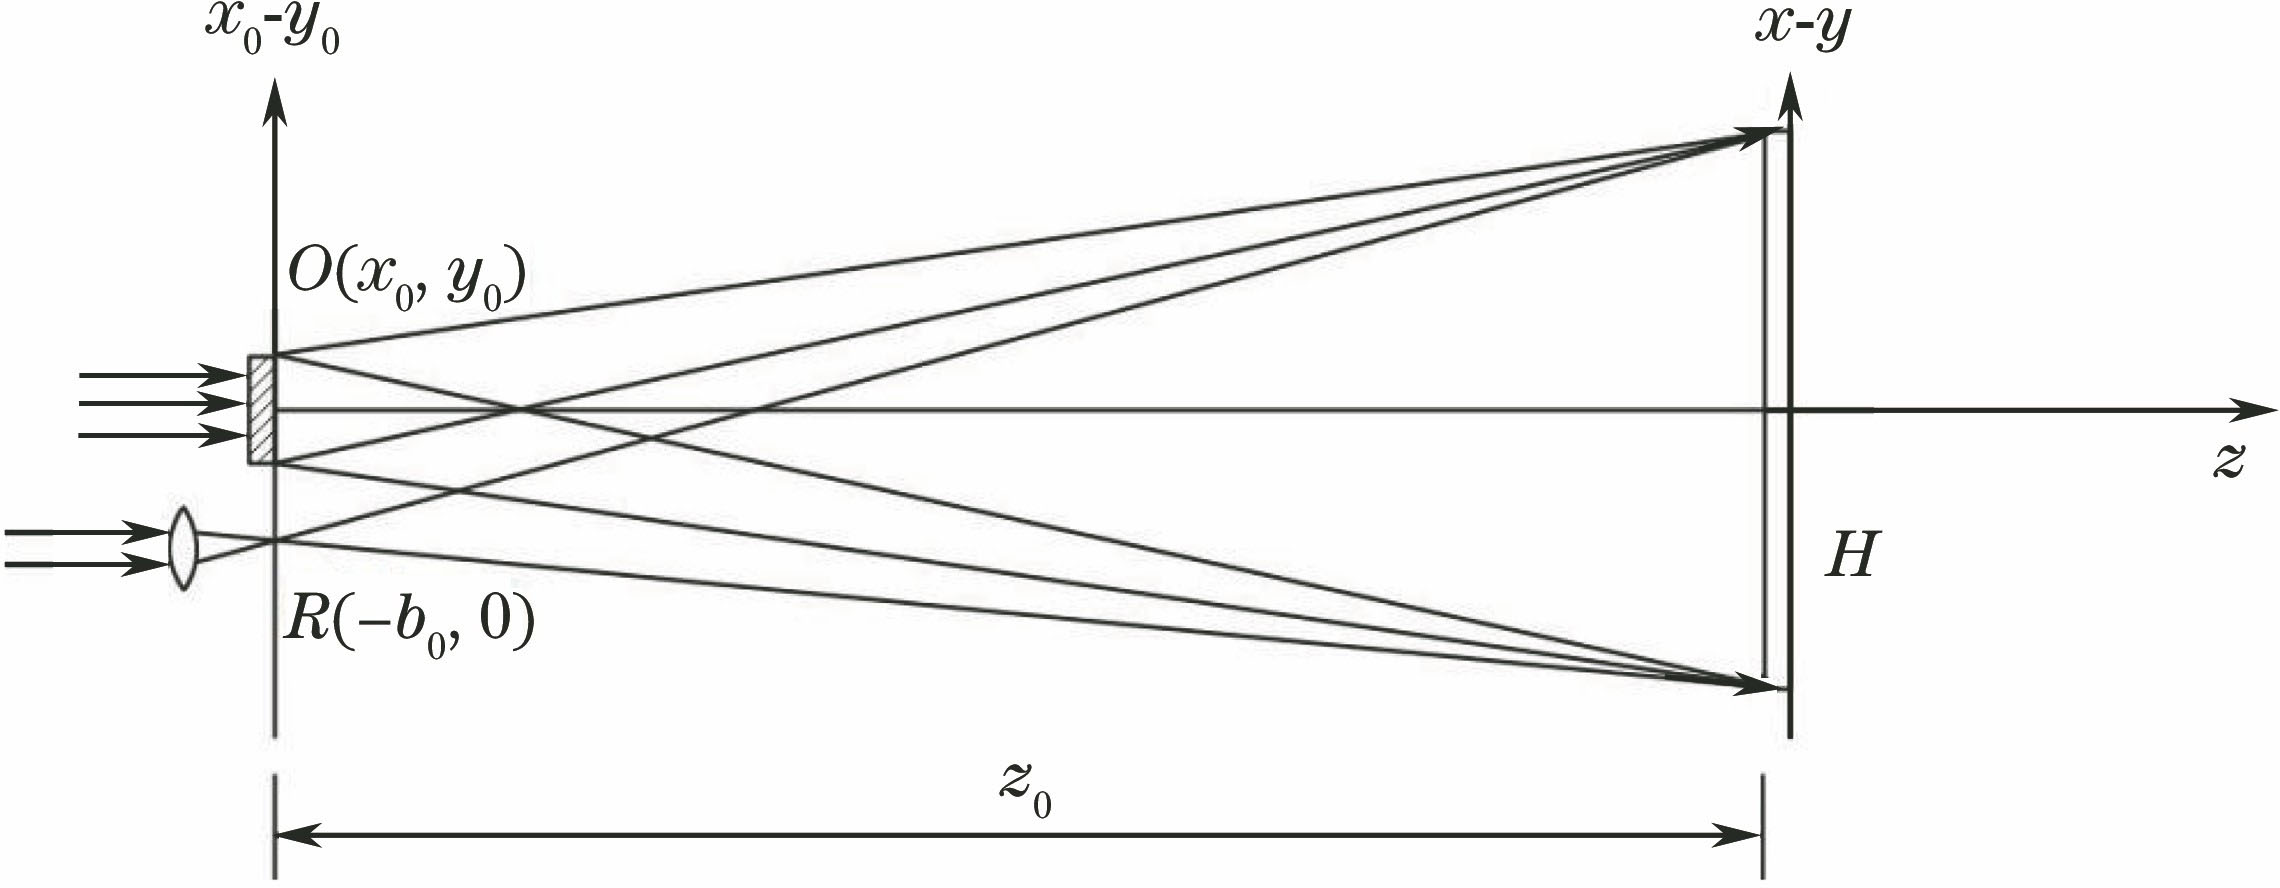 Lensless Fourier transform digital hologram record optical path diagram